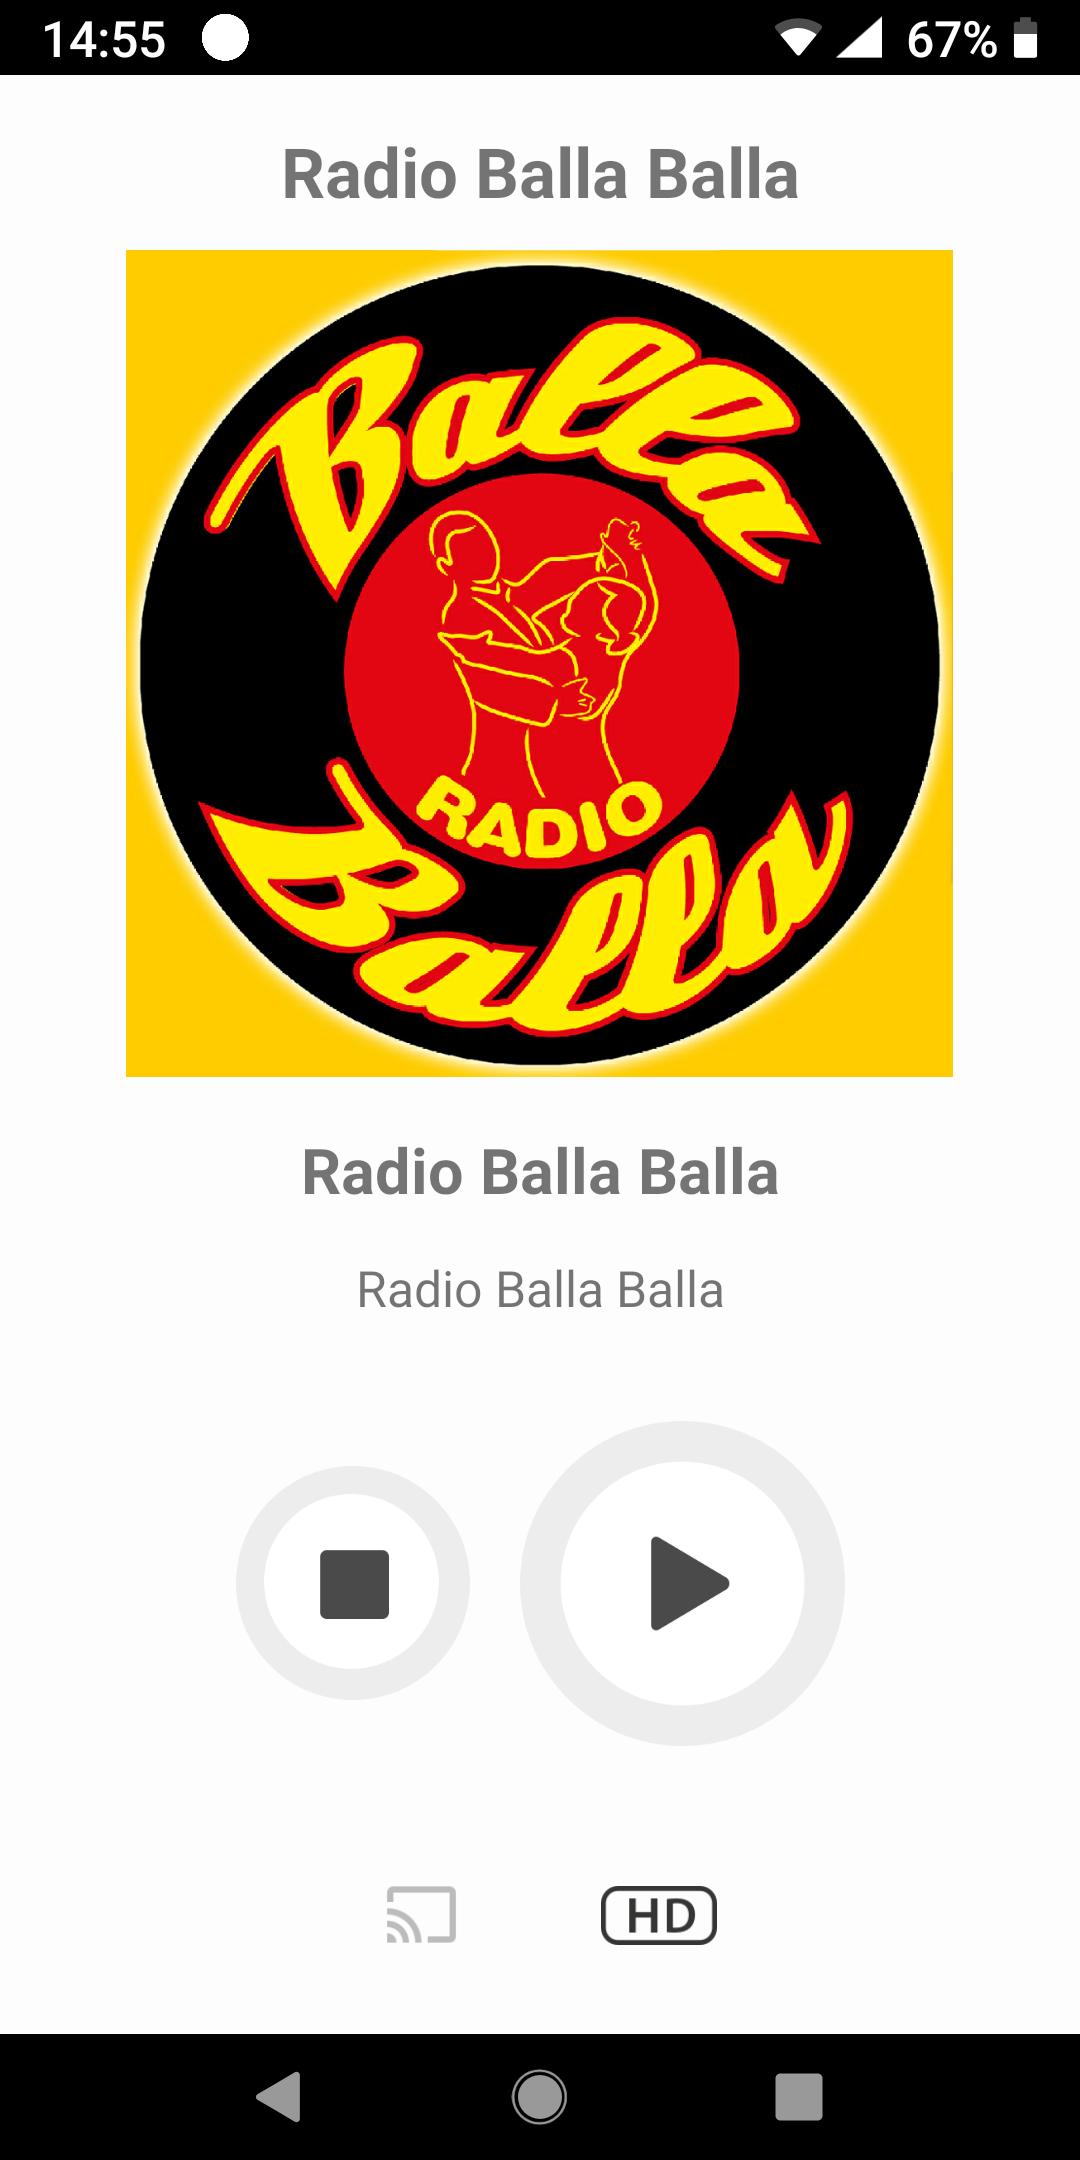 Radio Balla Balla for Android - APK Download